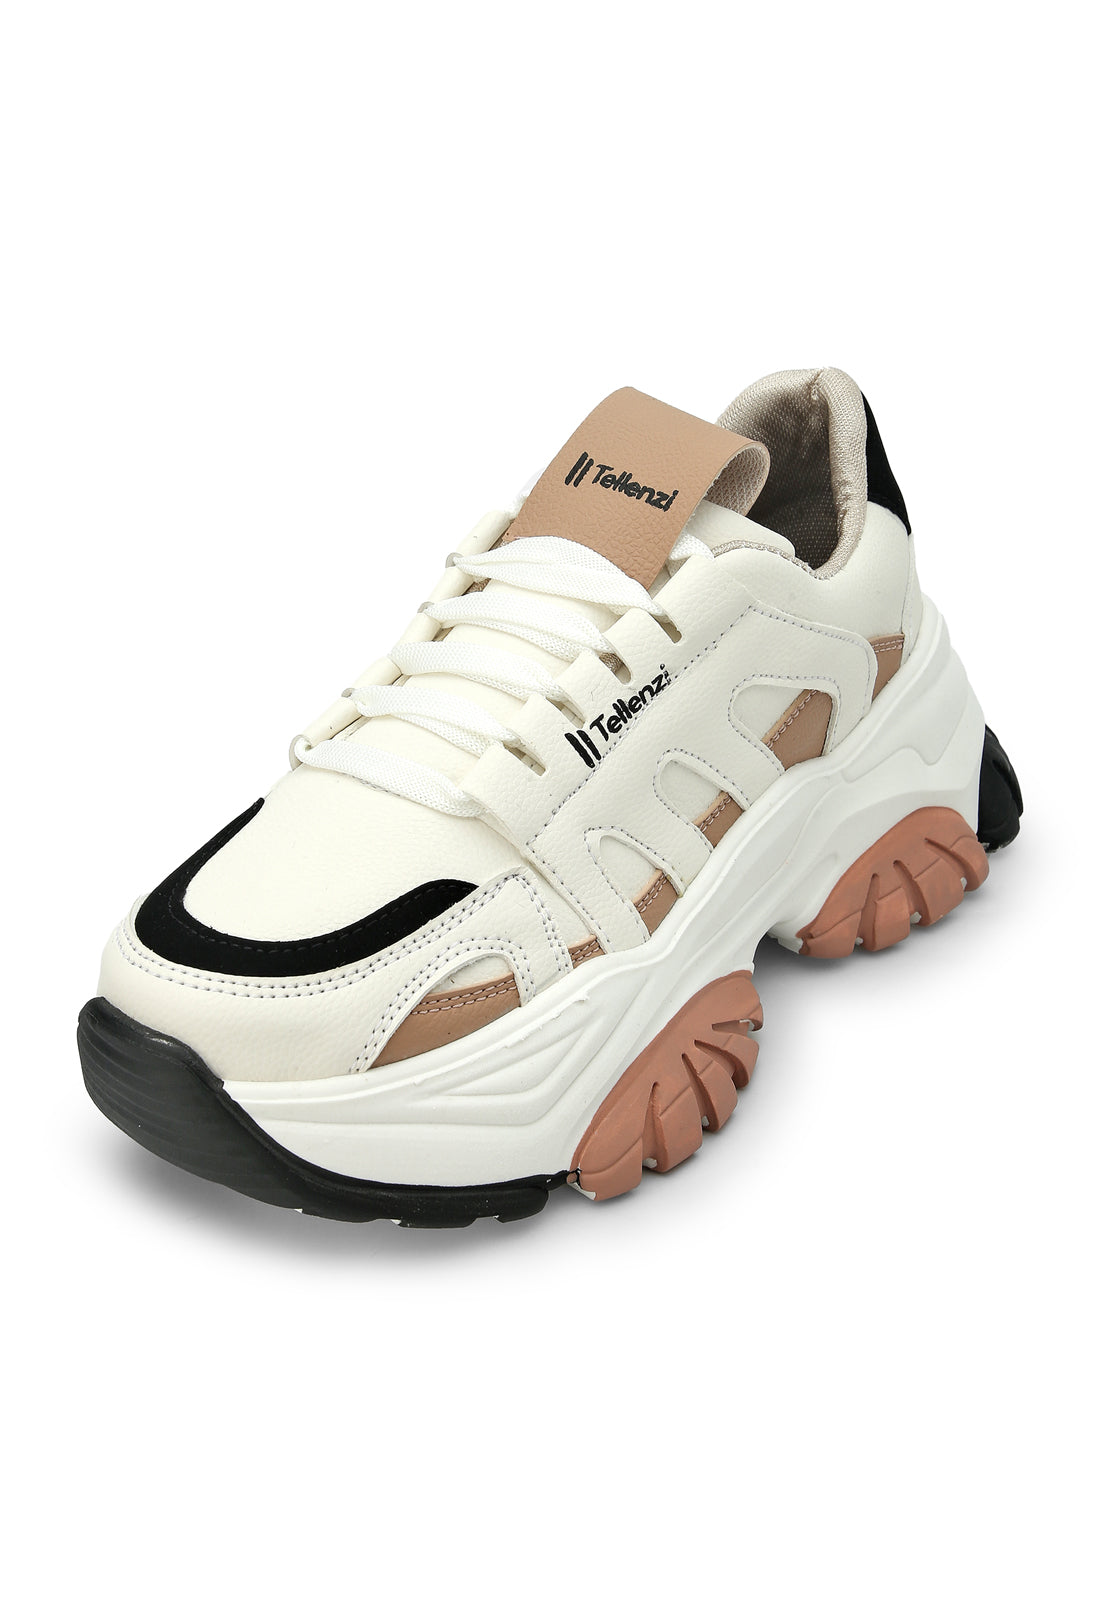 Tenis Sneakers Dama Beige-Crema Tellenzi 5017